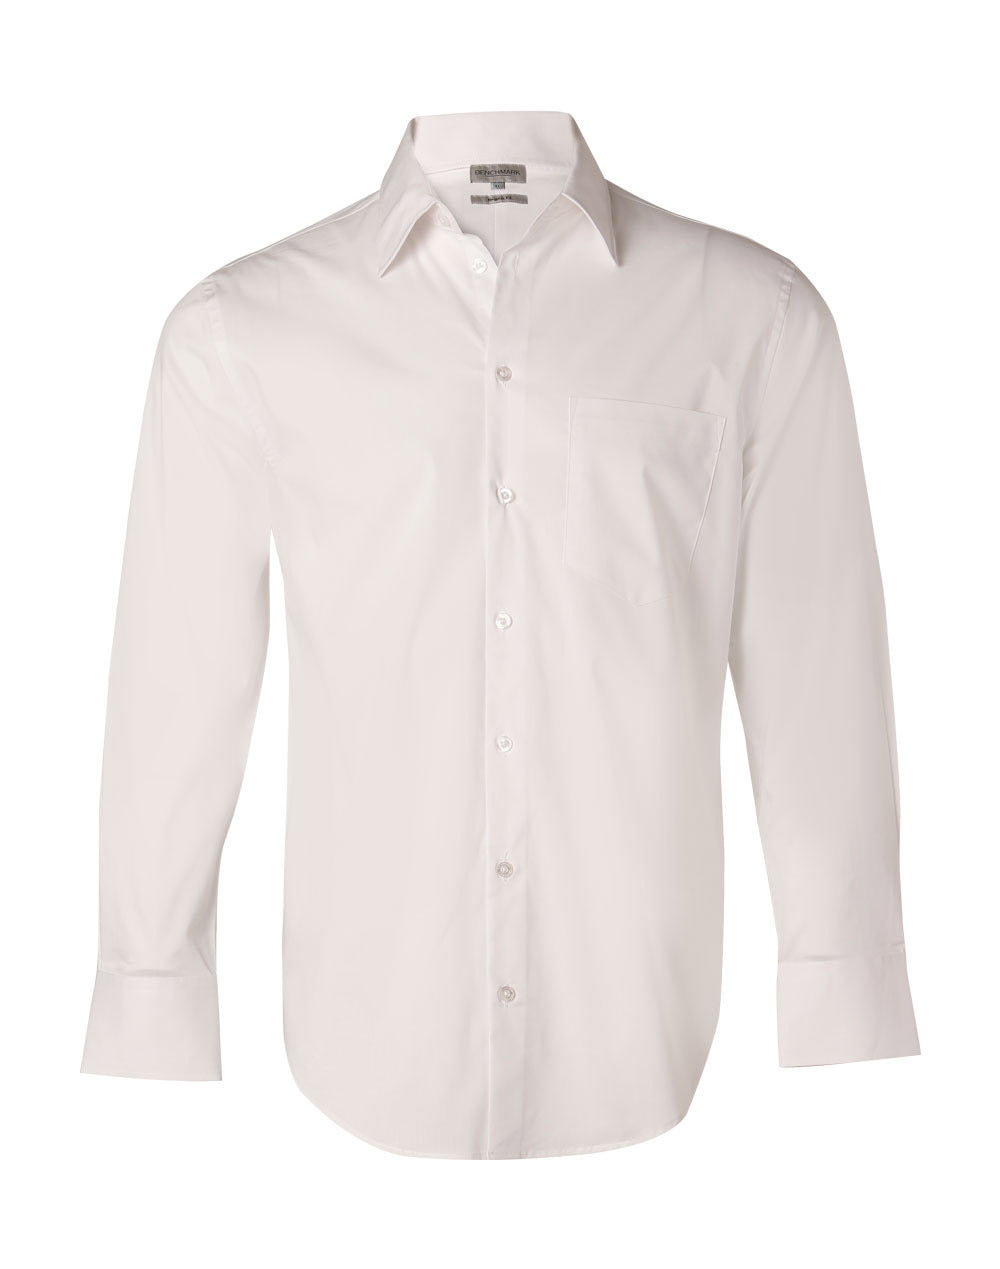 Winning Spirit Mens Cotton/Polo Stretch Long Sleeve Shirt